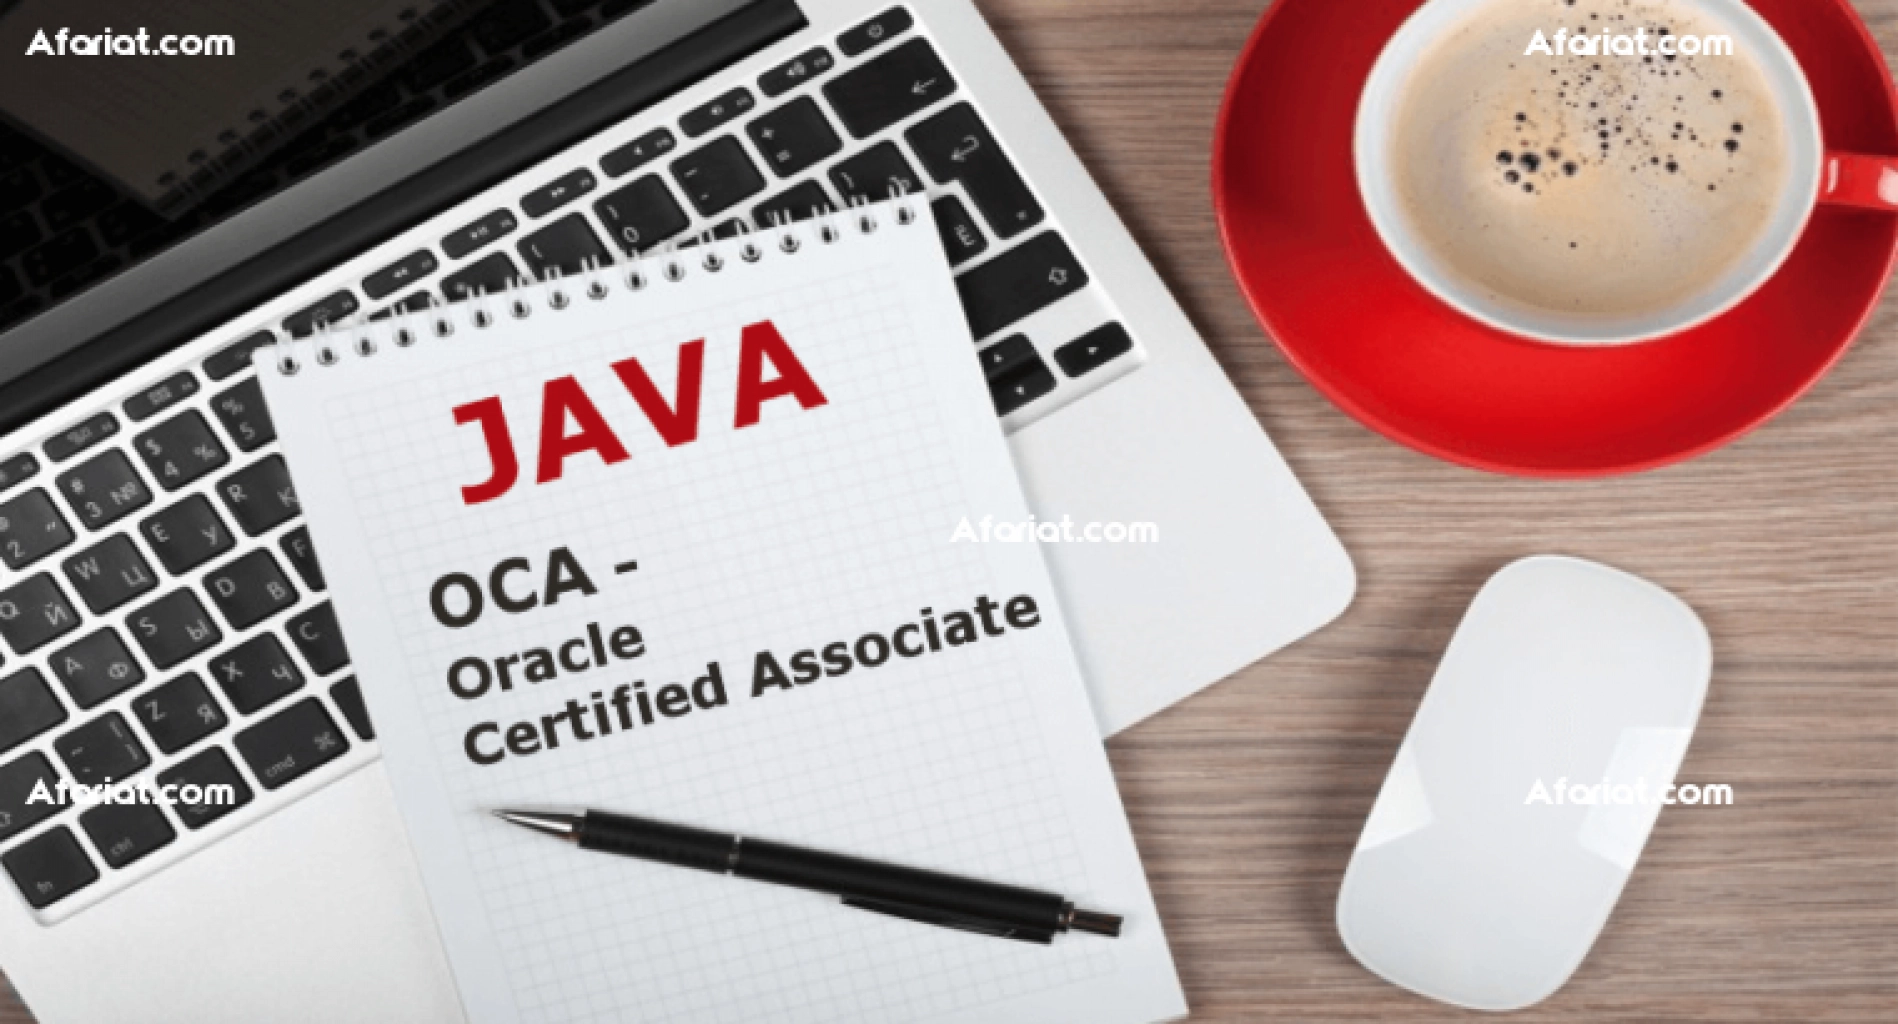 Formation officielle et certification OCA